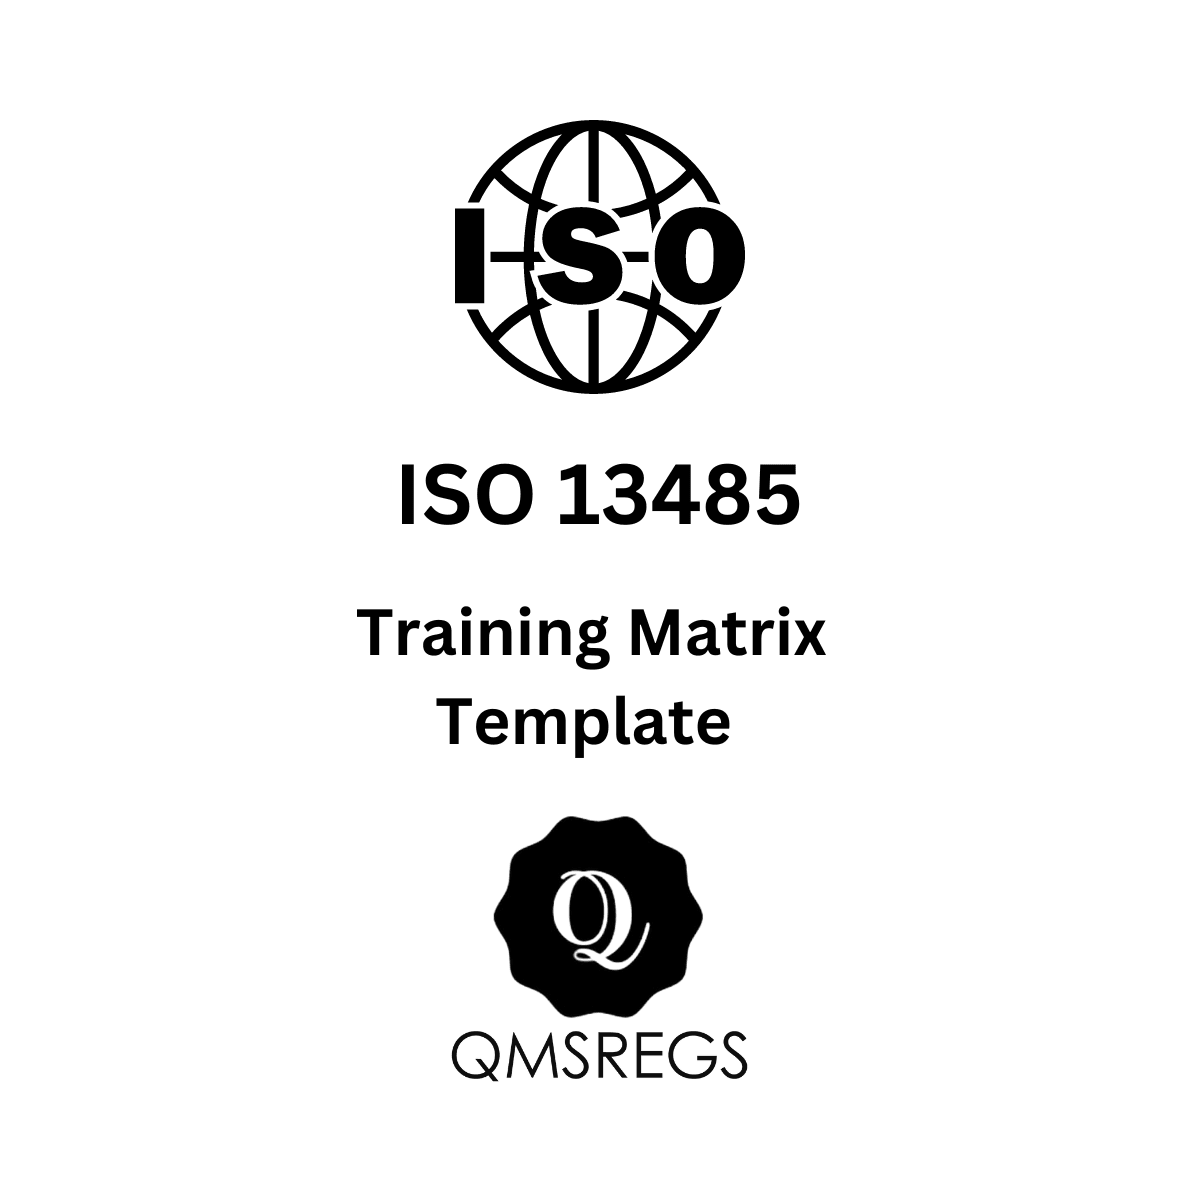 ISO 13485 Training Matrix Template